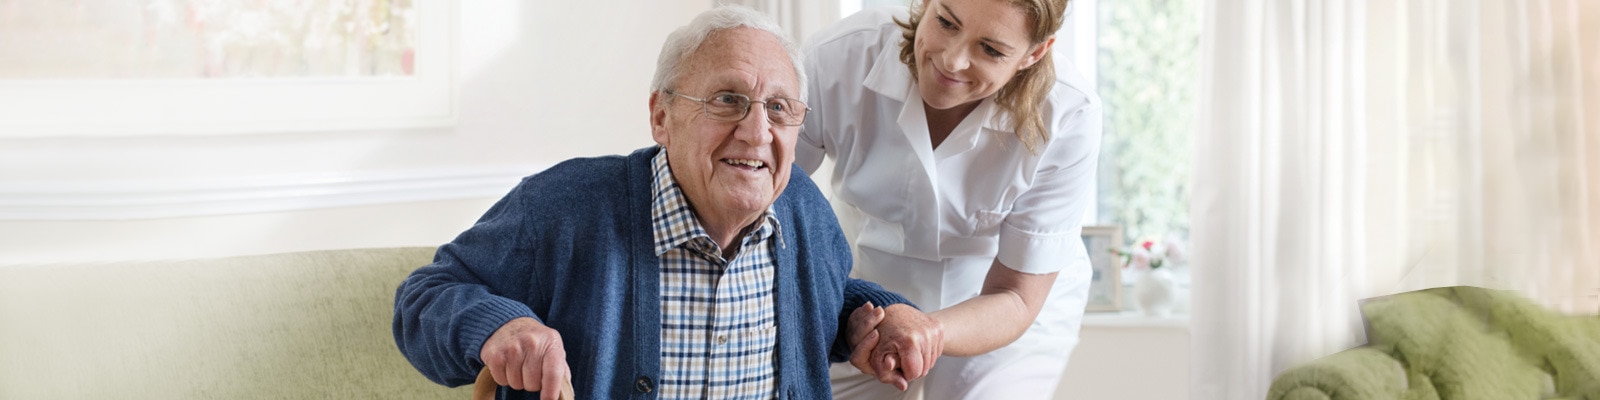 Una caregiver in uniforme bianca aiuta un uomo anziano a sedersi 